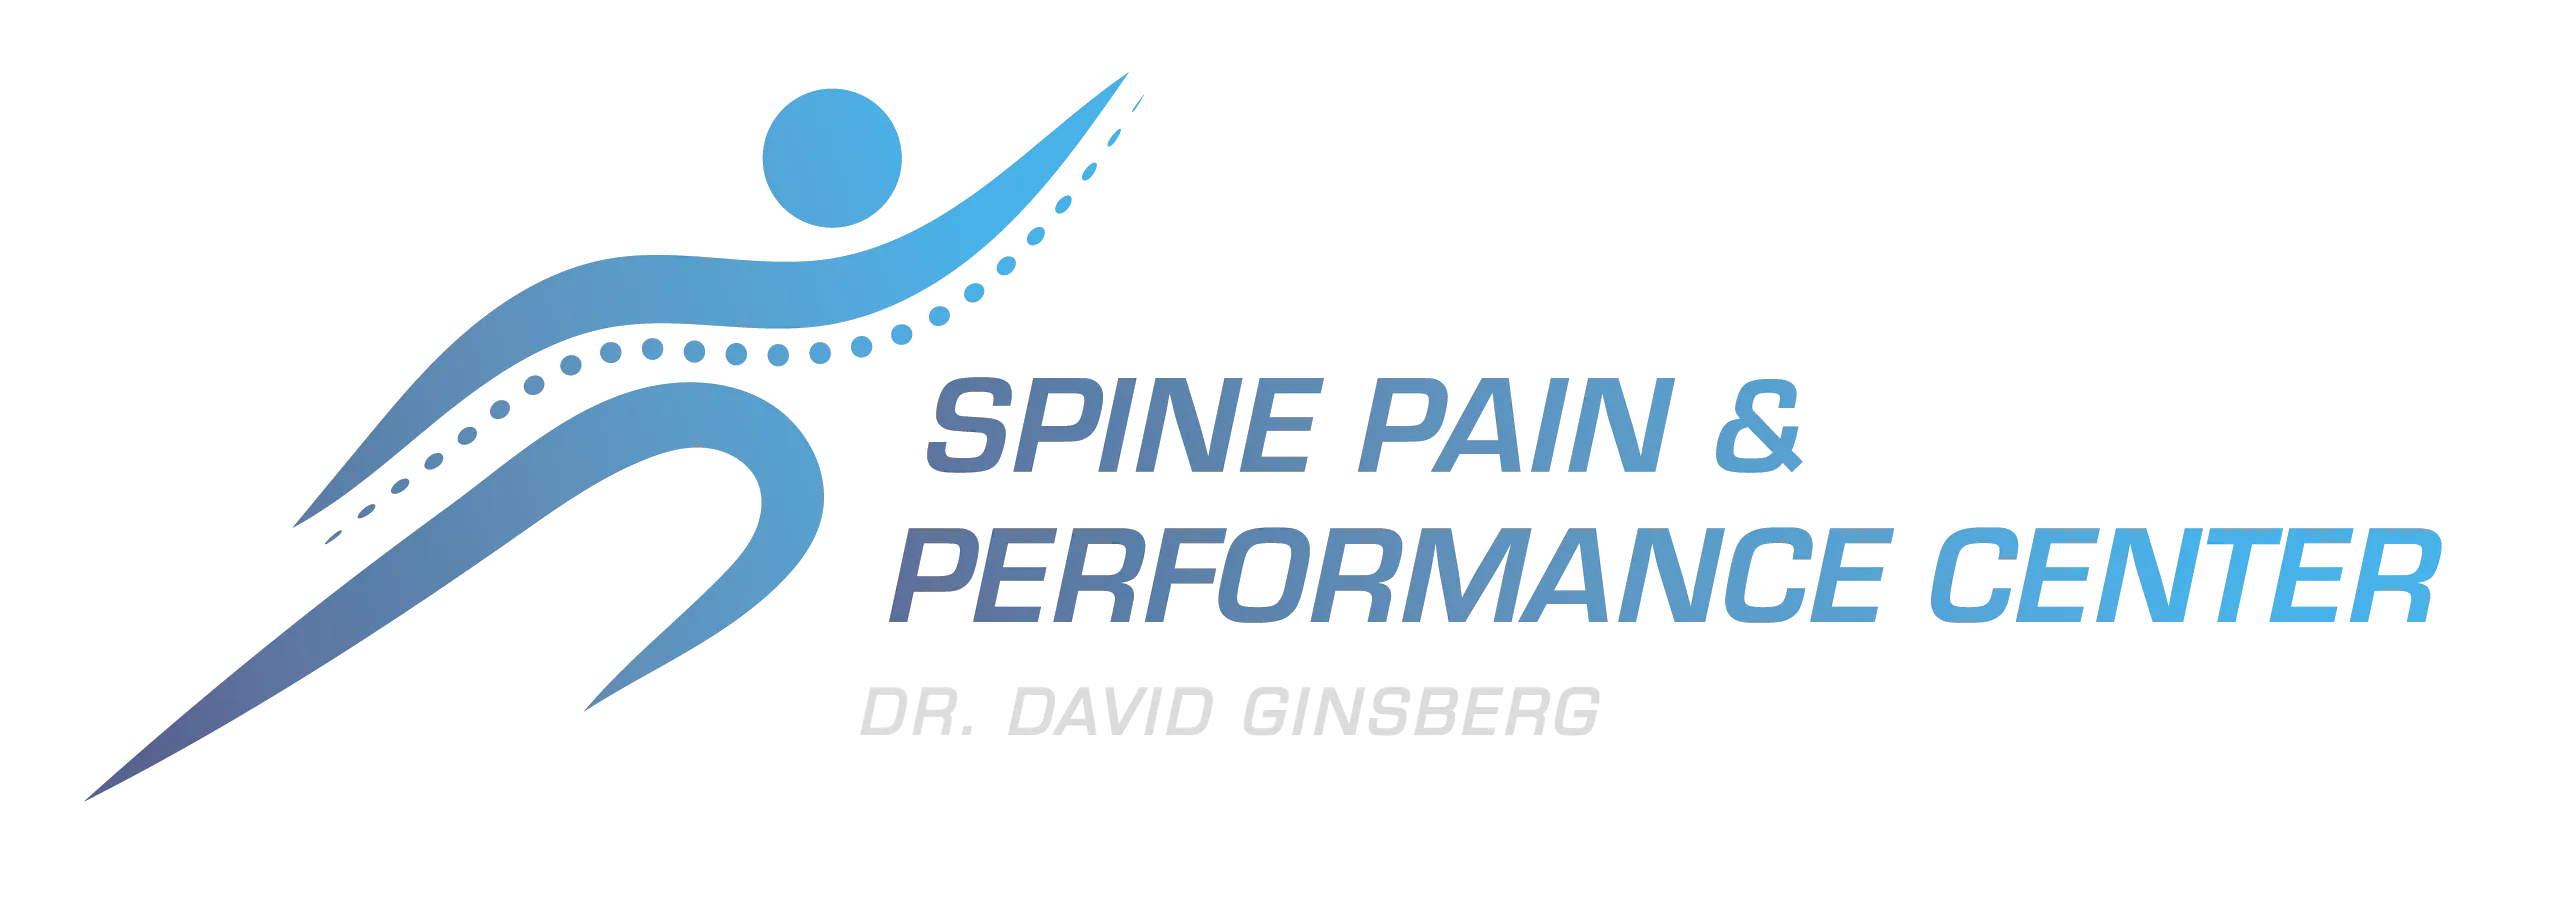 Spine Pain & Performance Center logo